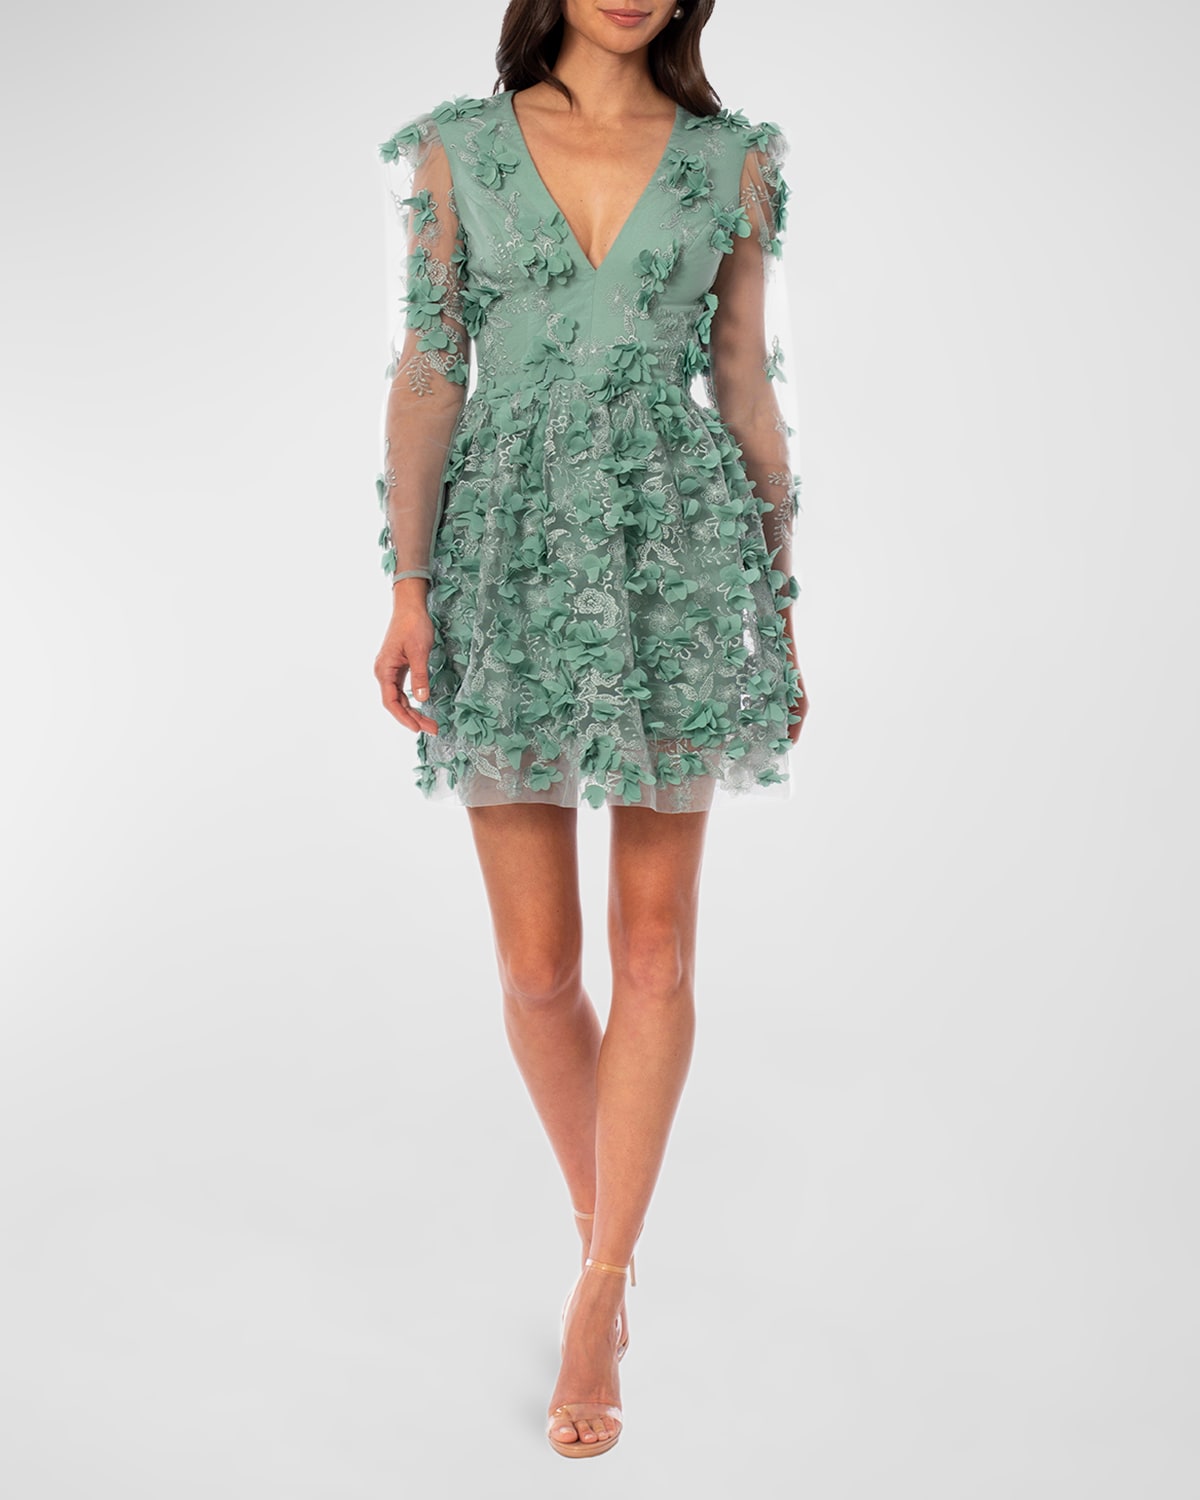 HELSI Sidney Illusion-Sleeve Floral Applique Dress